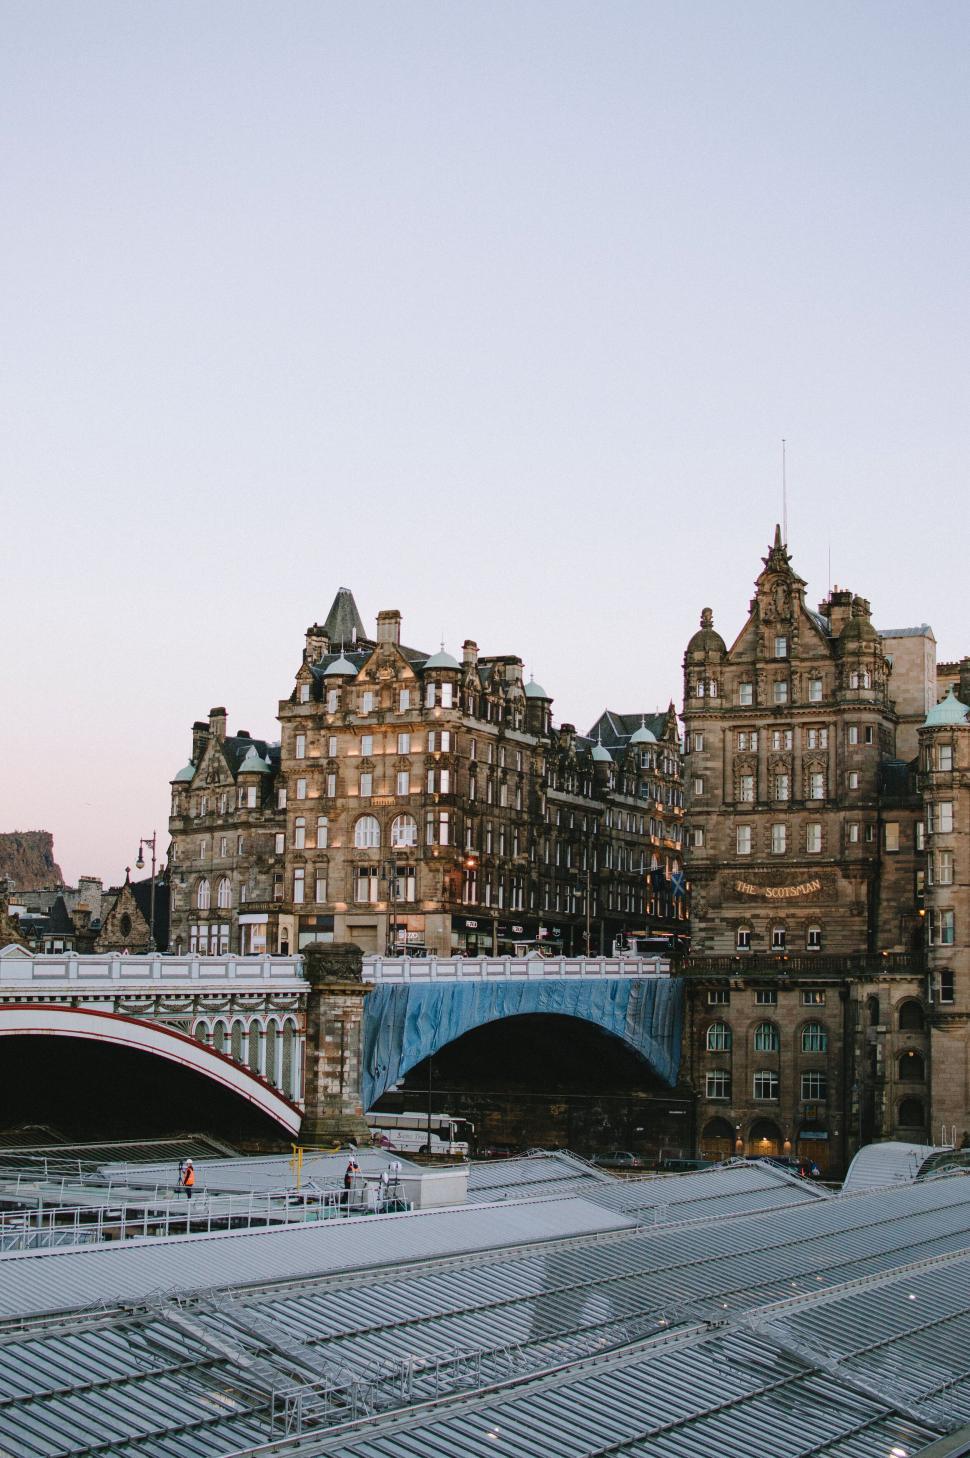 Free Image of Historic buildings in Edinburgh at dusk 